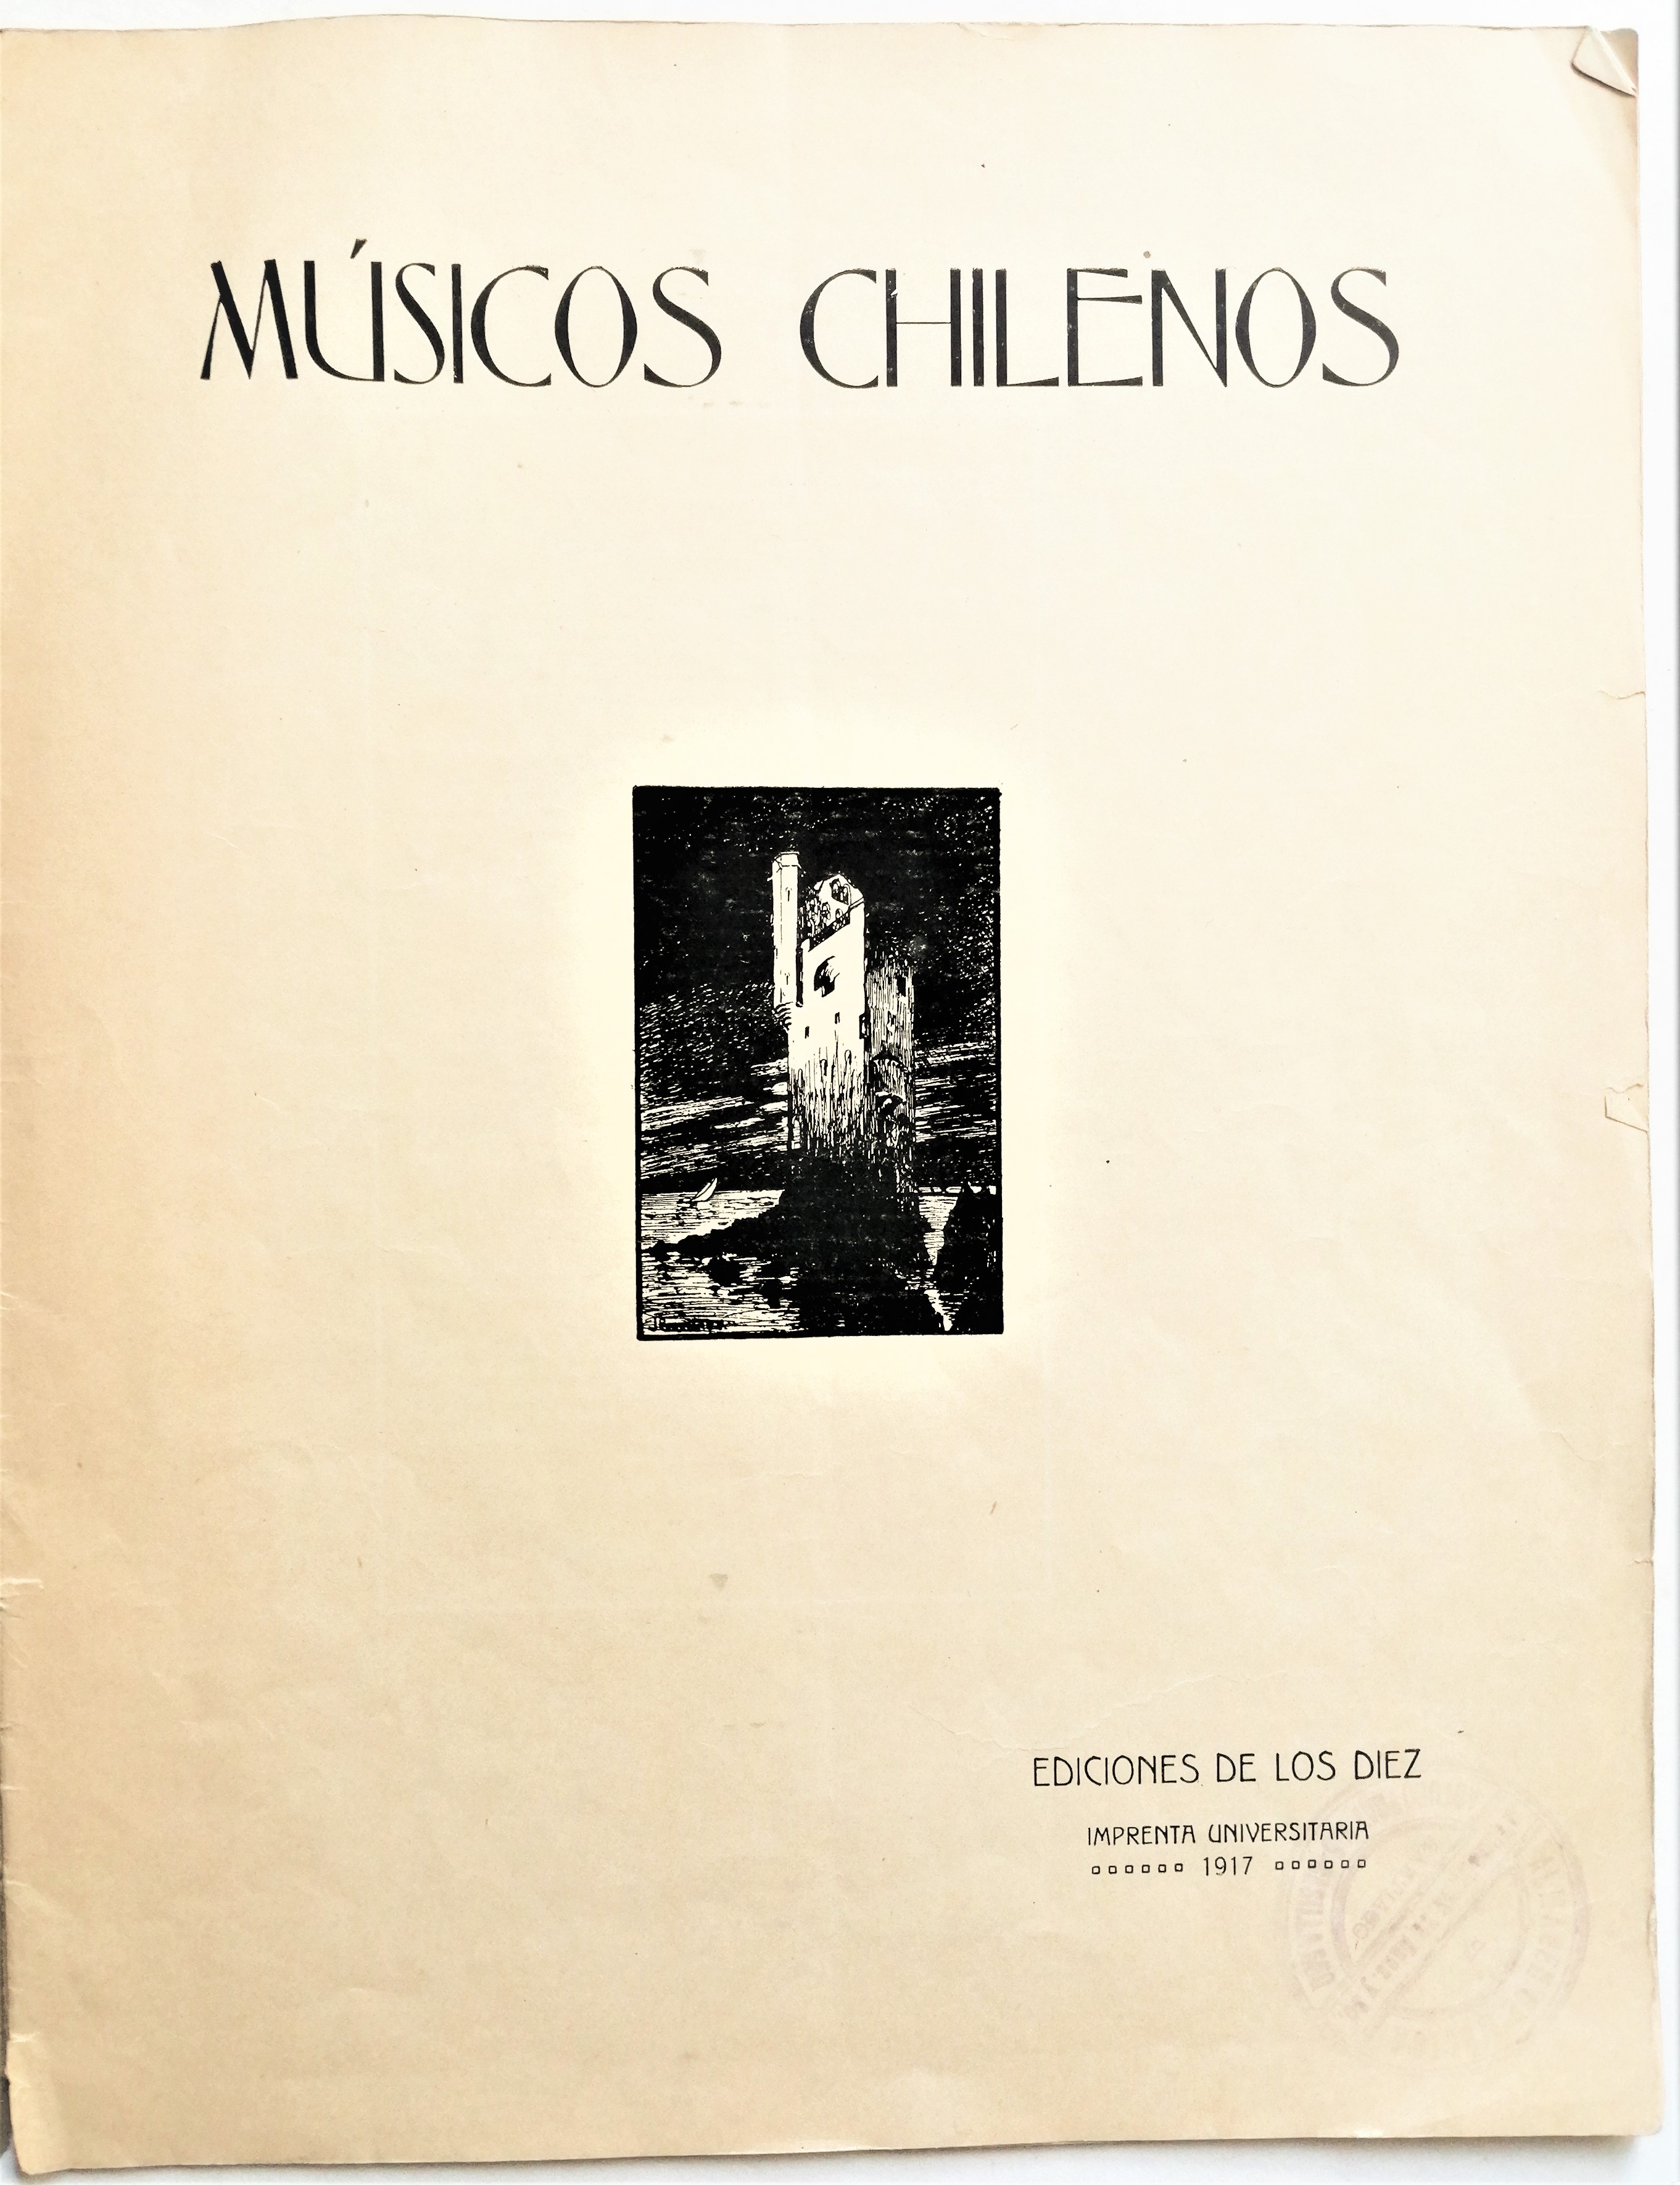 Músicos Chilenos N°9